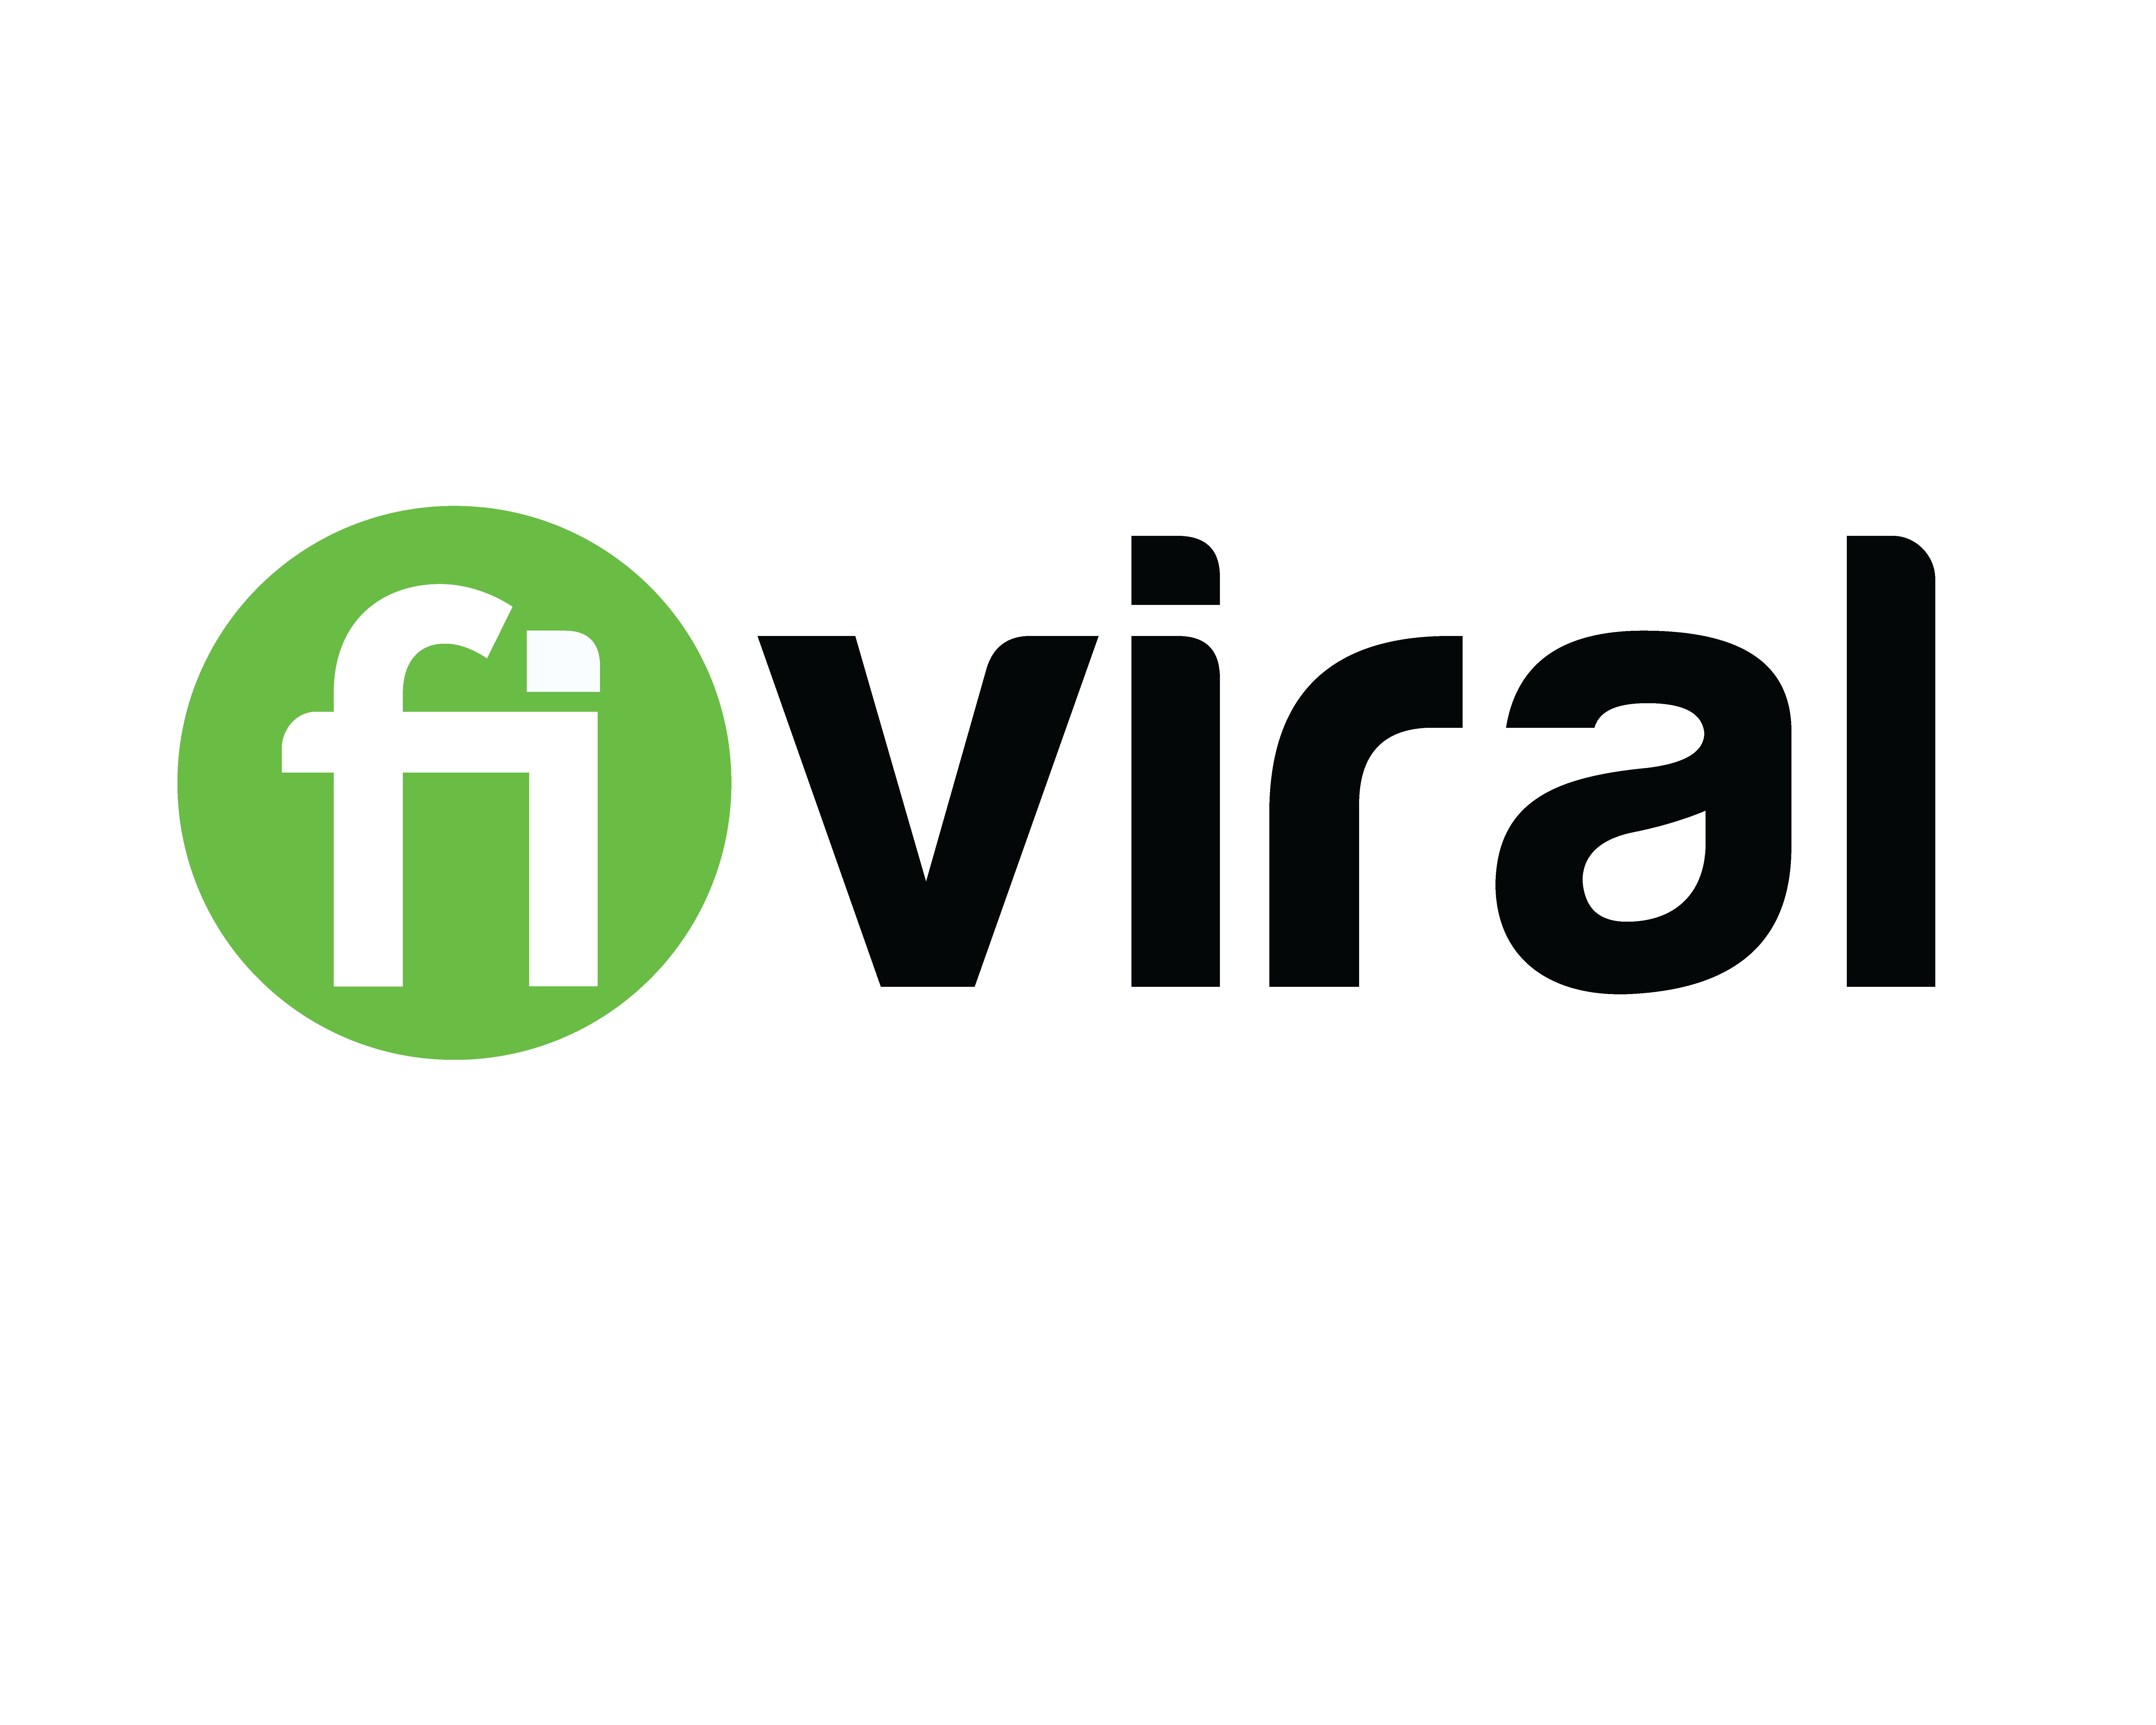 fiviral